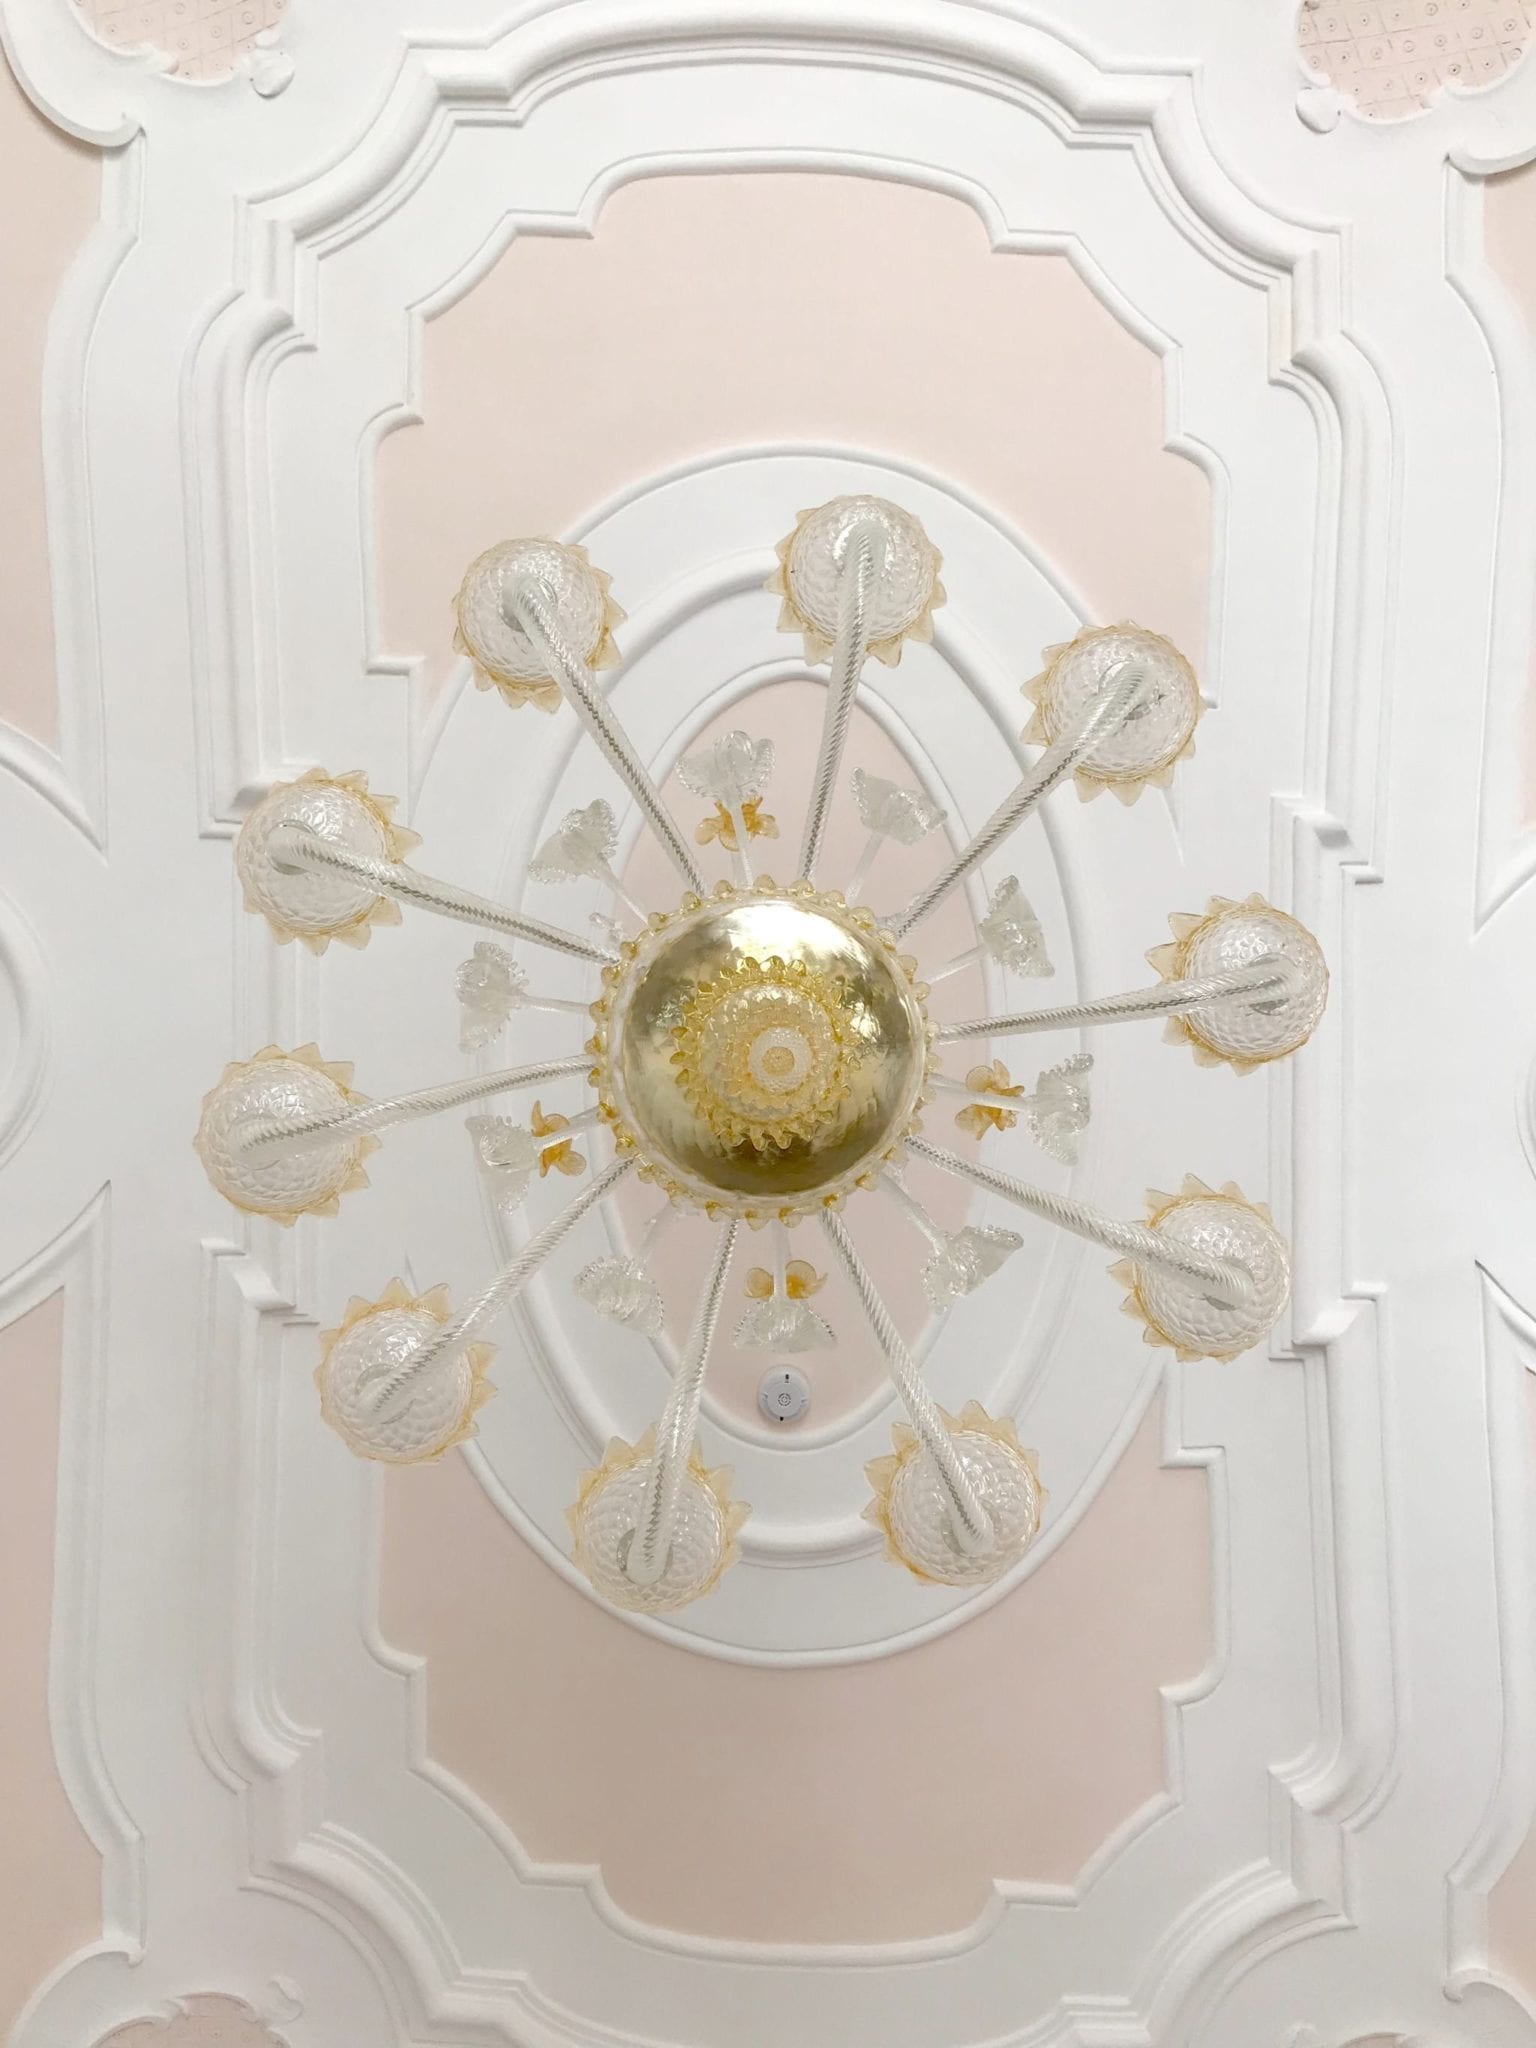 Villa Rufolo chandelier with pink ceiling.